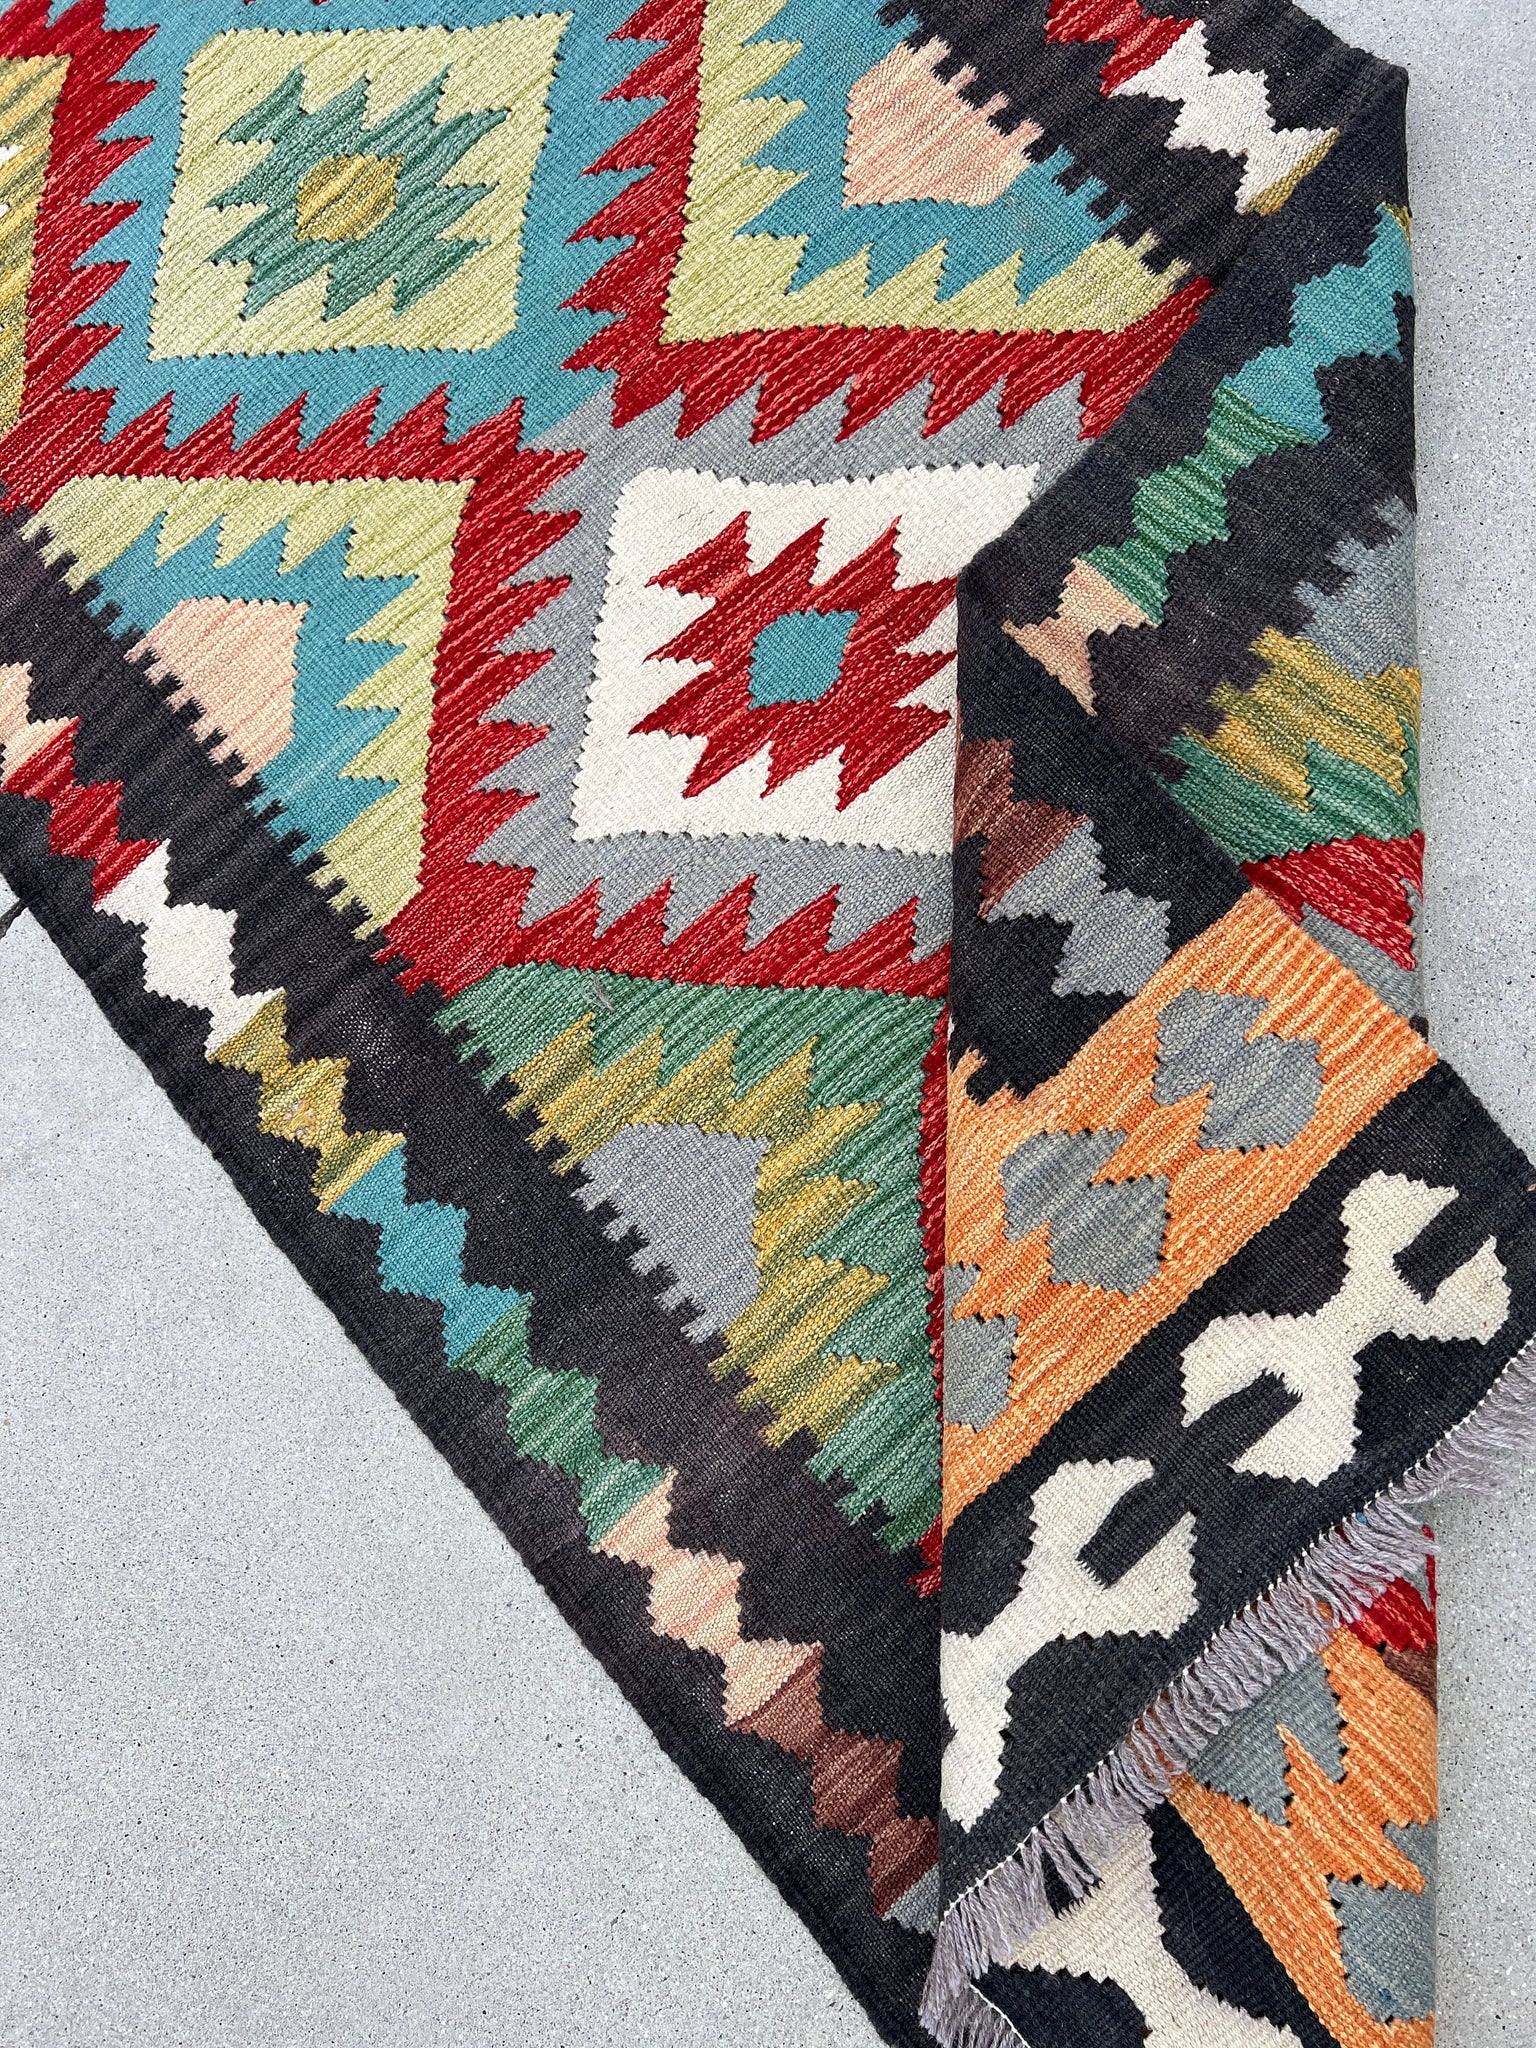 3x13 Handmade Afghan Kilim Runner Rug | Charcoal Black Grey Caramel Red White Green Baby Blue Chocolate Brown | Flatweave Flat Woven Wool